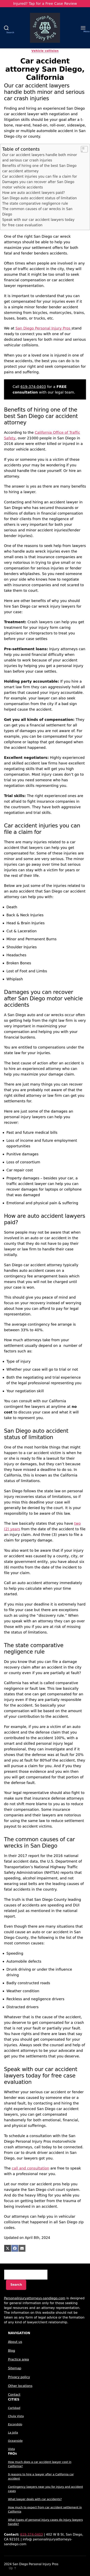 The San Diego Personal Injury Law Pros - San Diego CA Lawyers